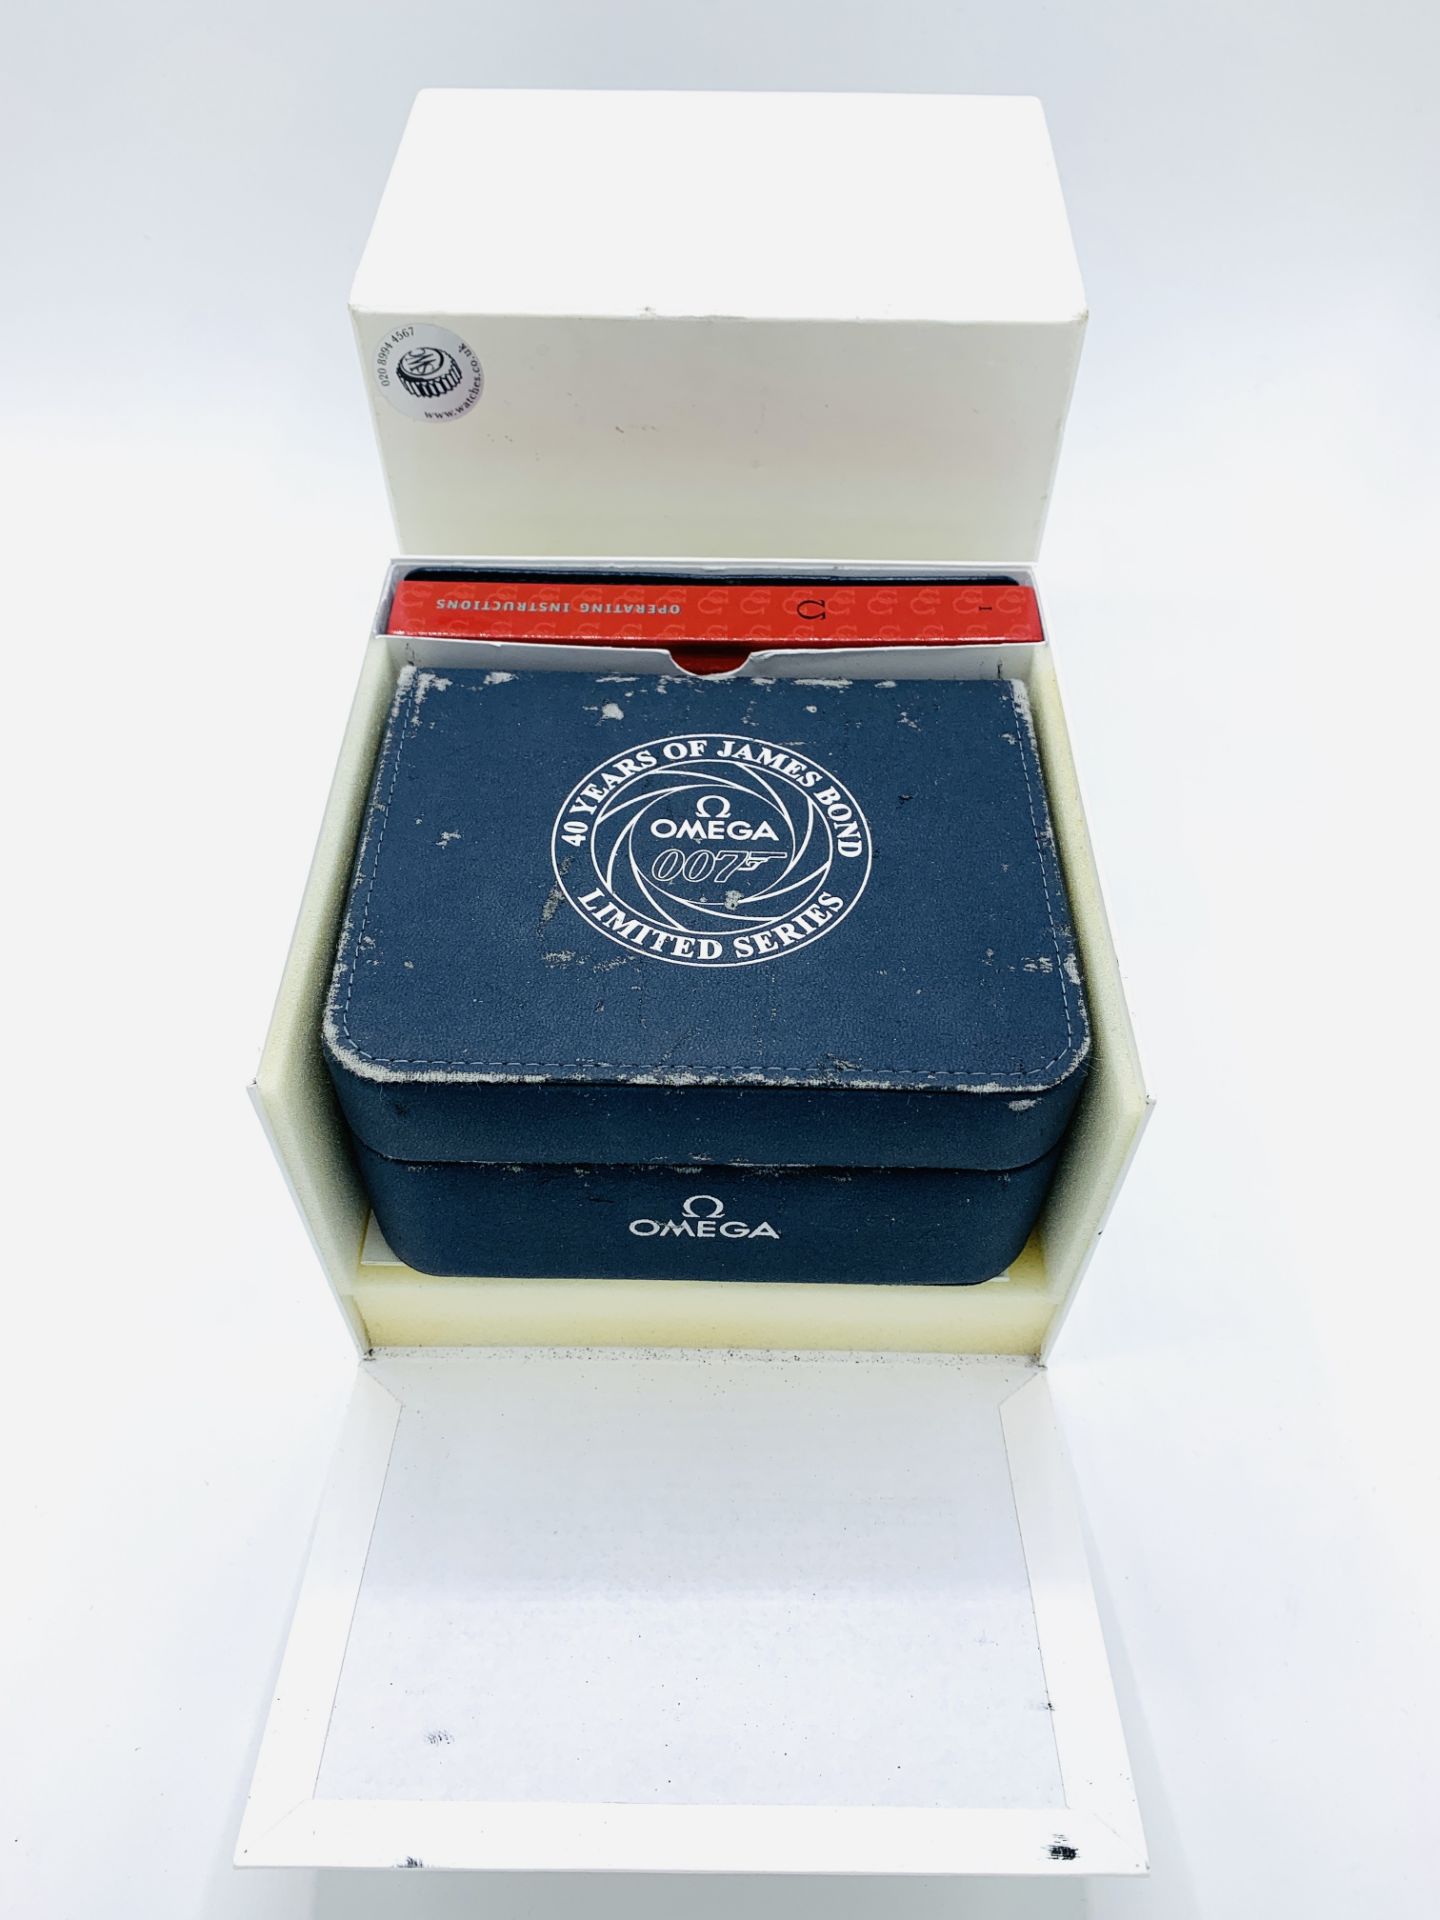 Omega Seamaster Professional Chronometer "40 years of James Bond" Limited Series - Image 10 of 10